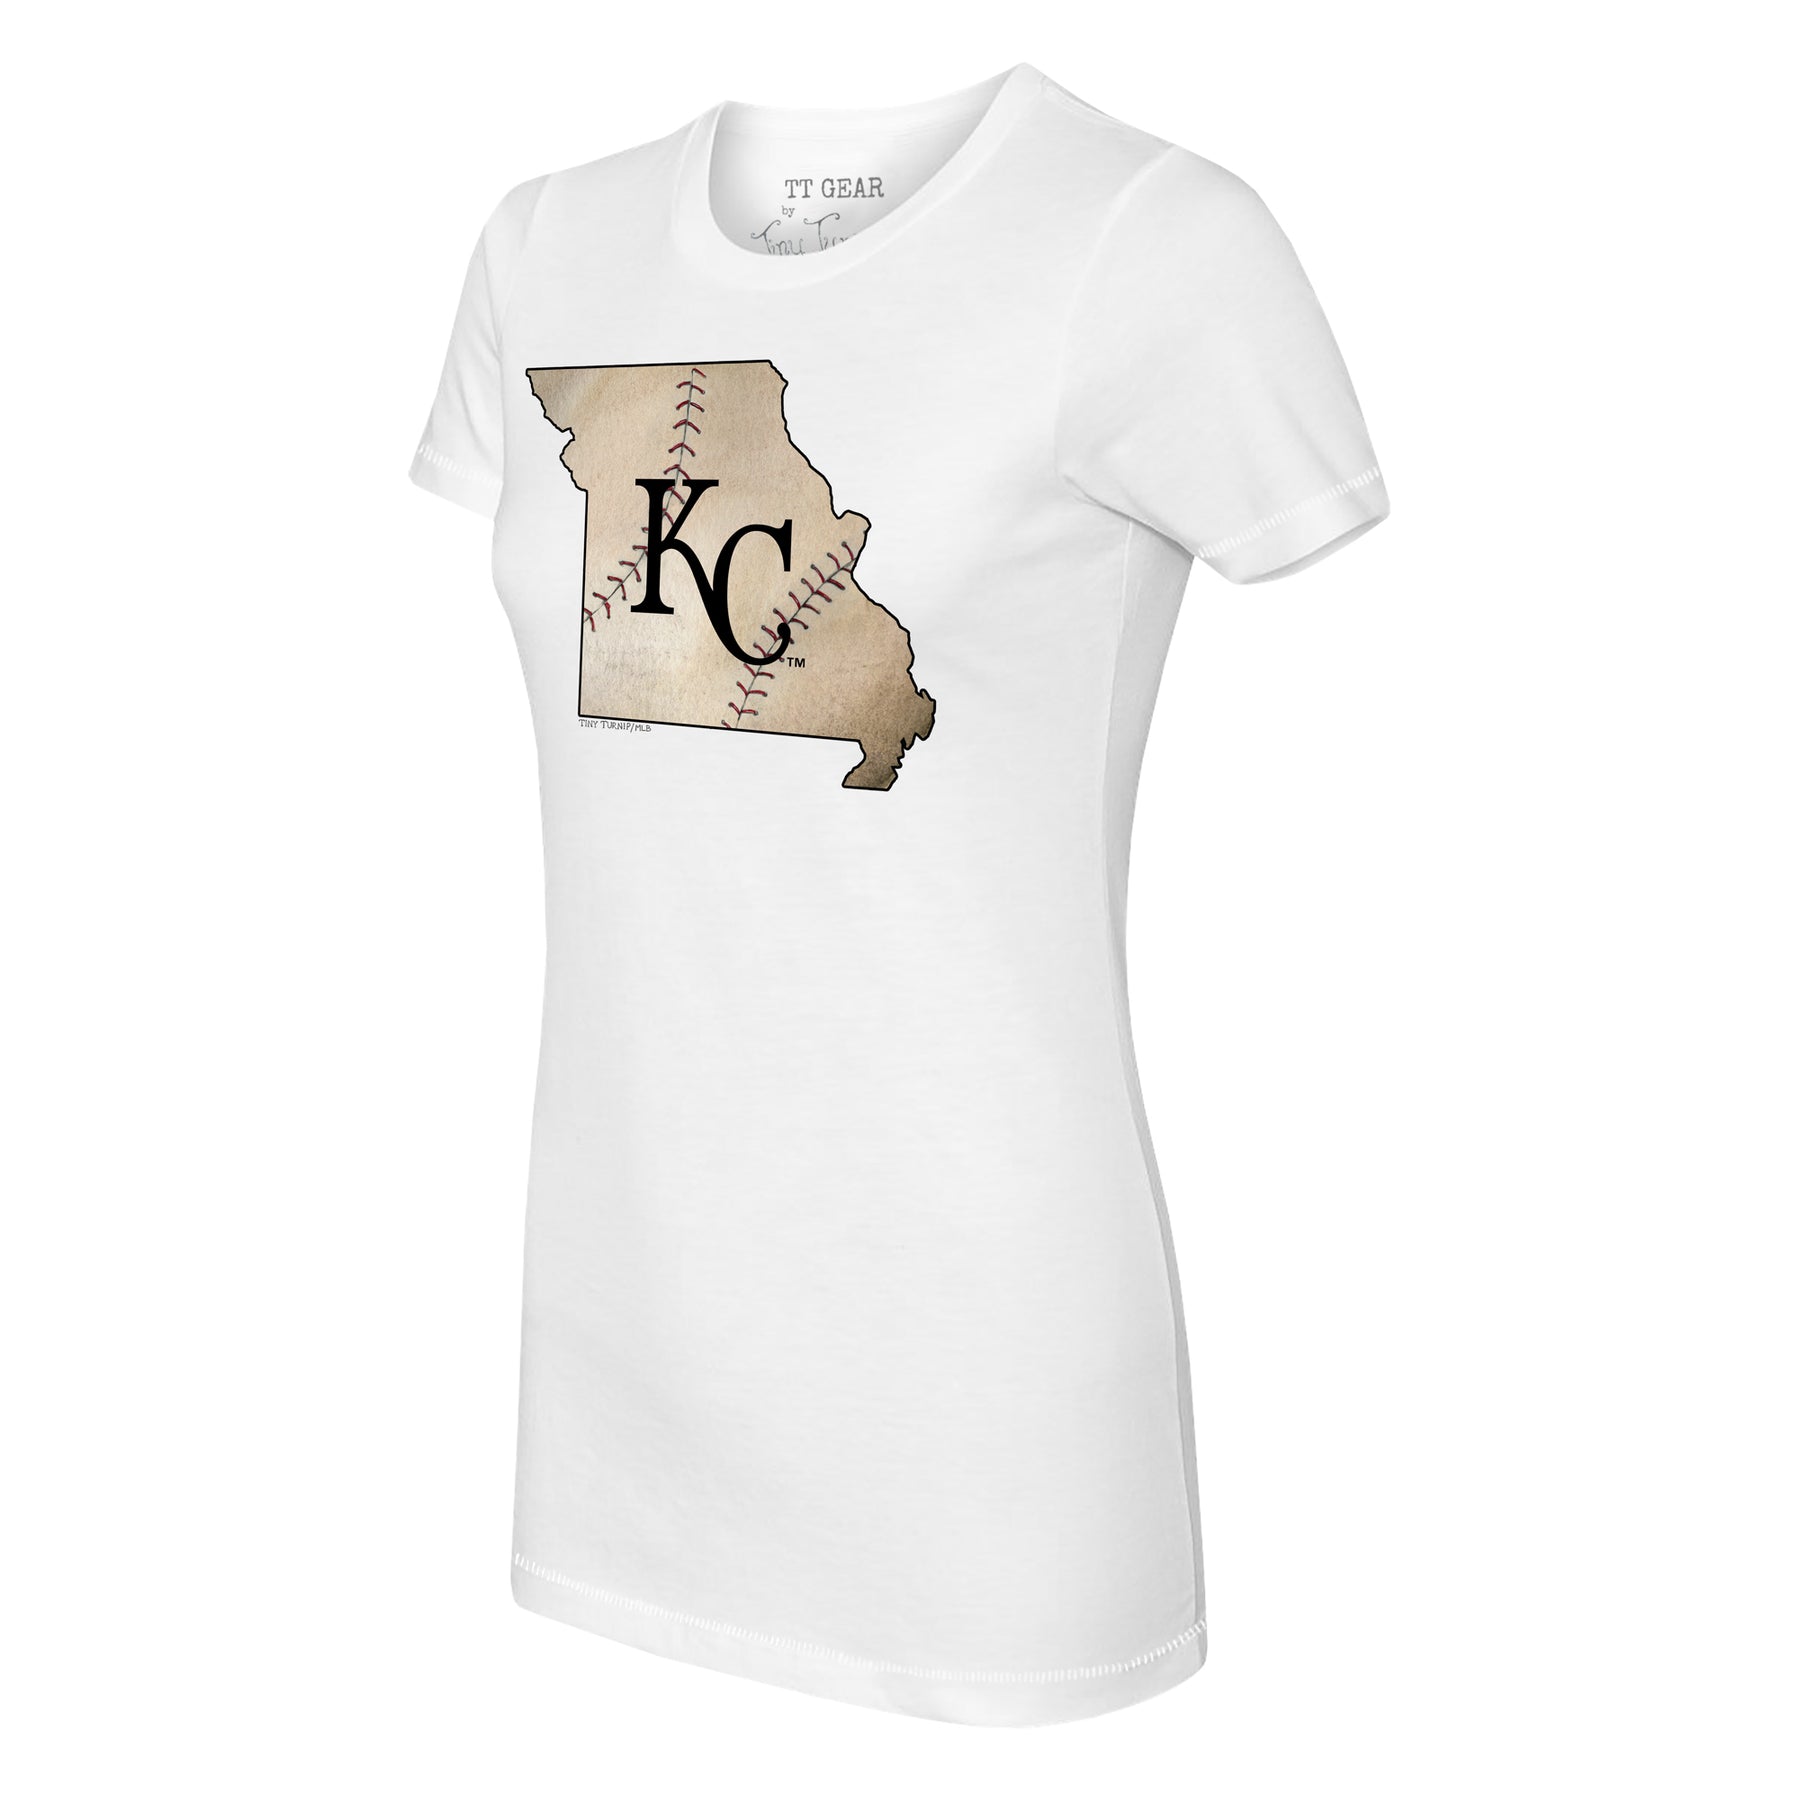 Kansas City Royals Women's Shirts